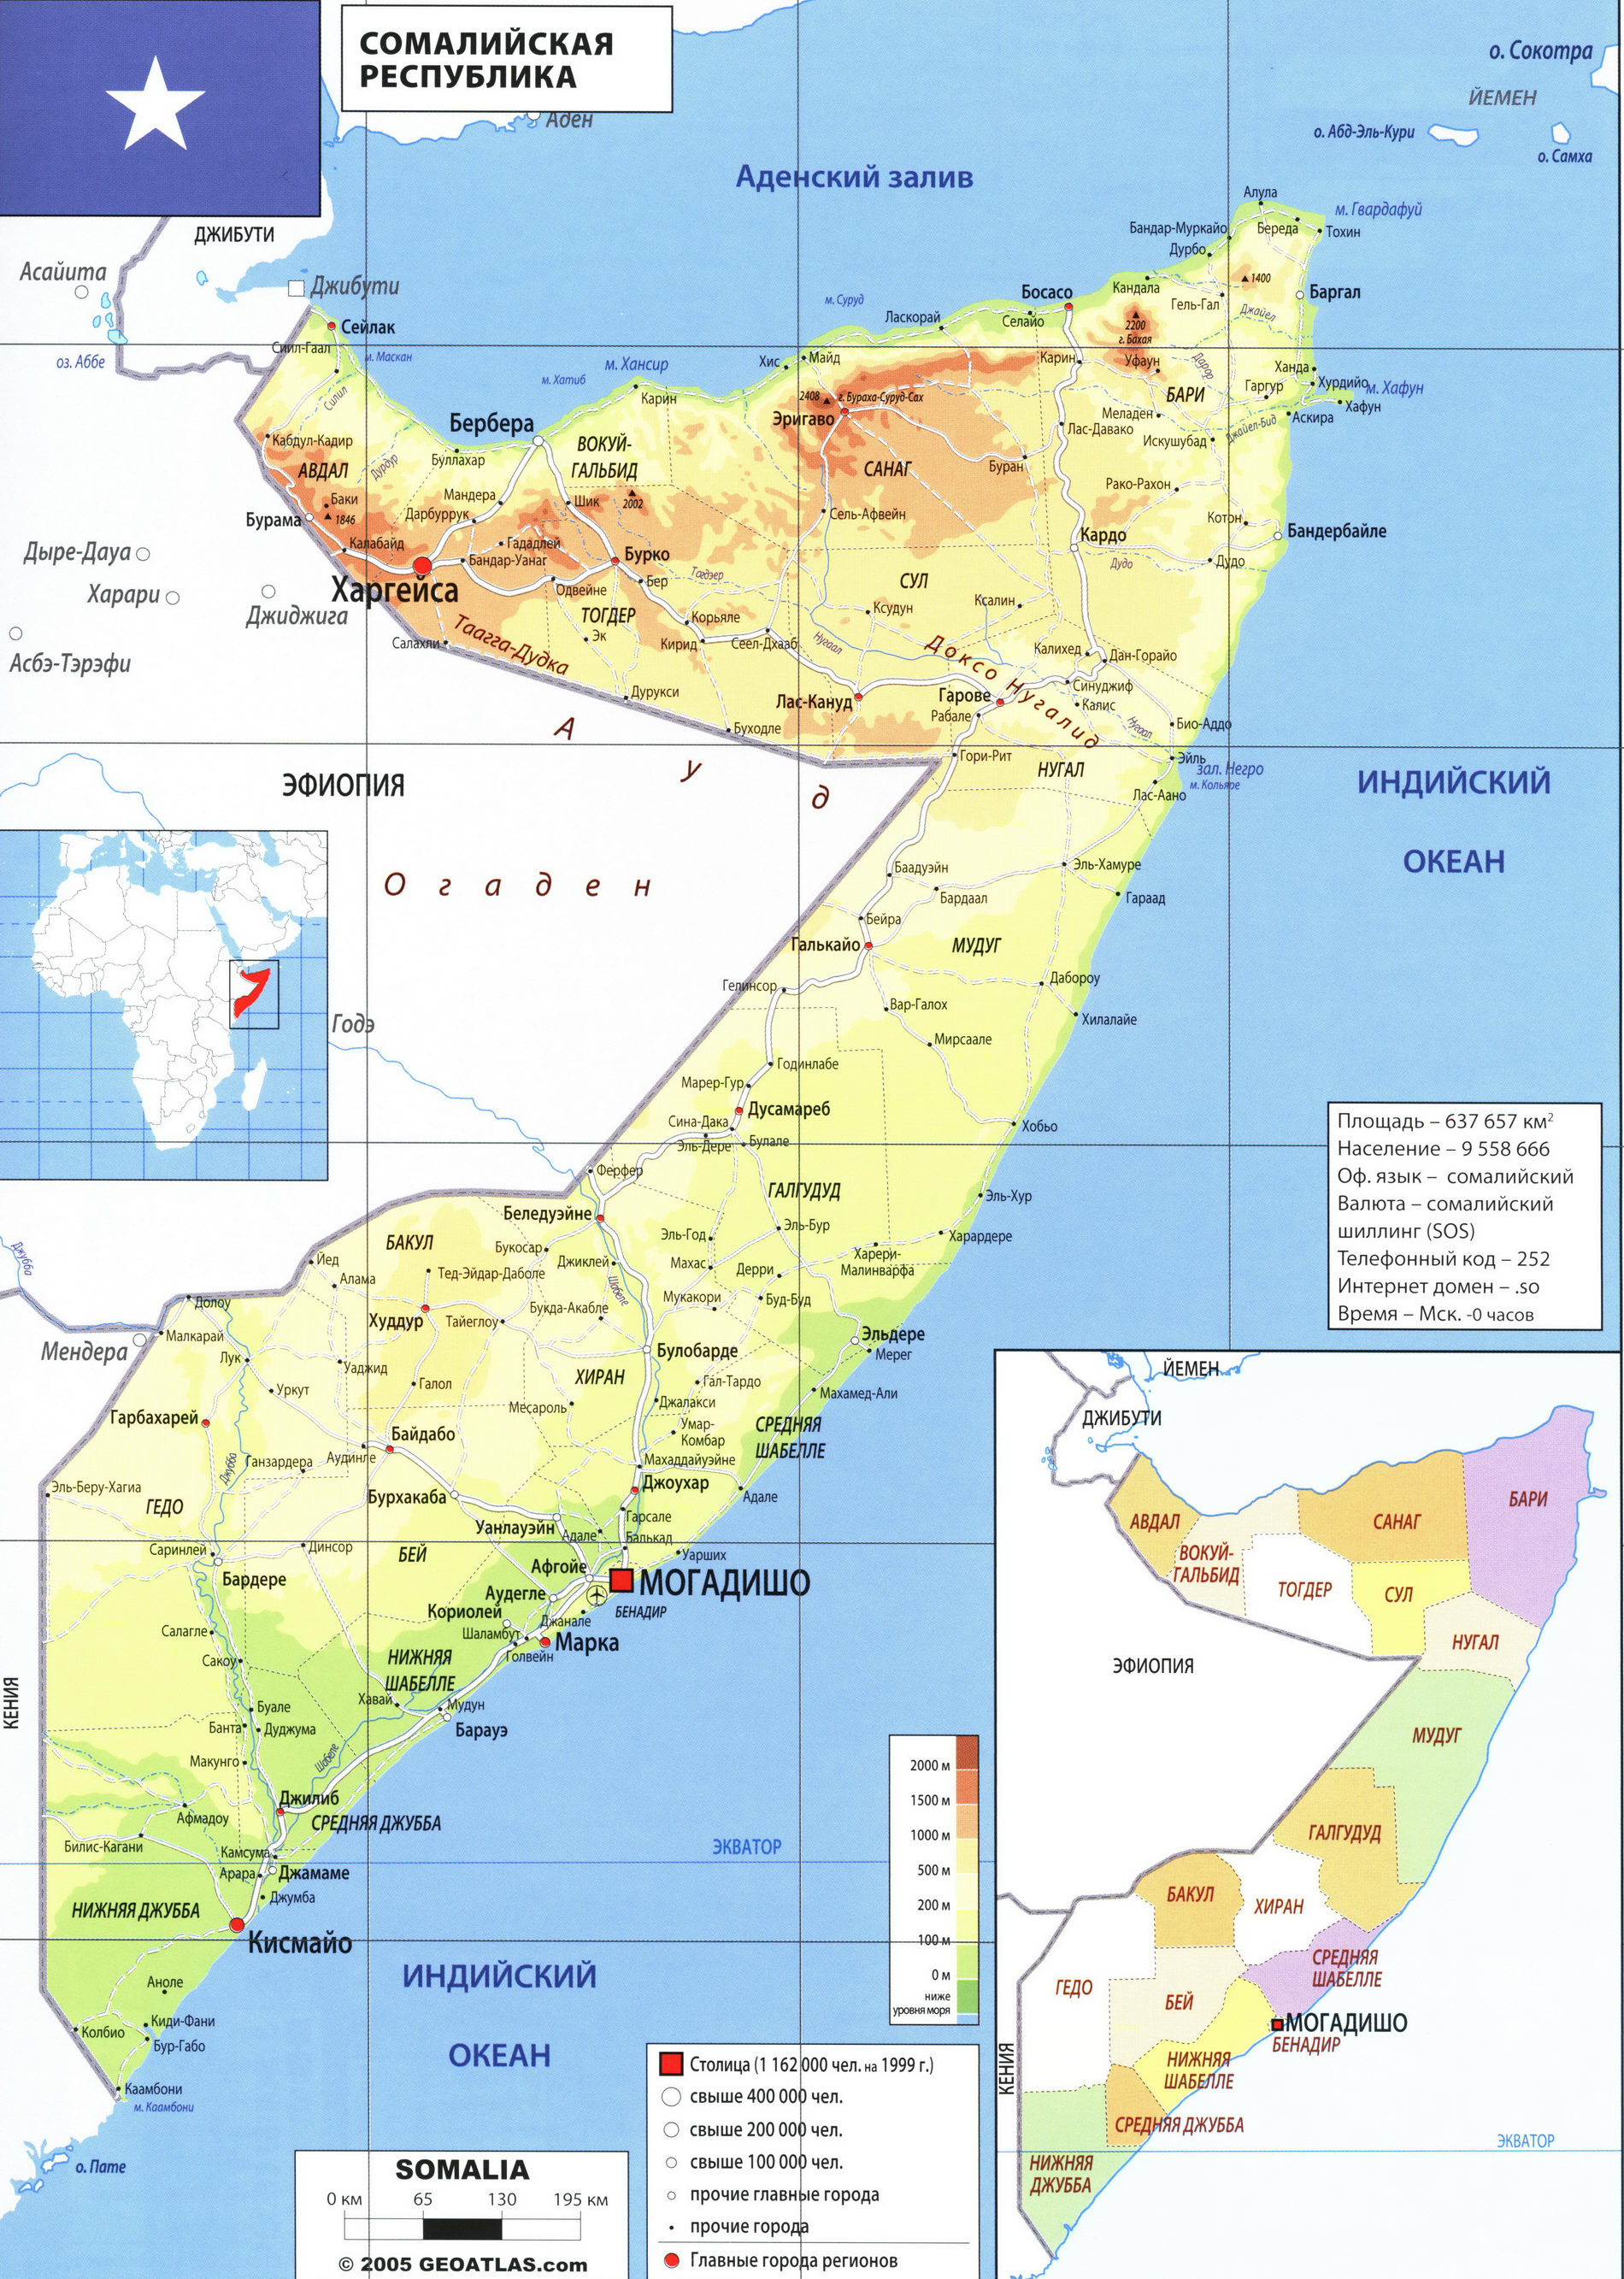 Сомали карта на русском языке